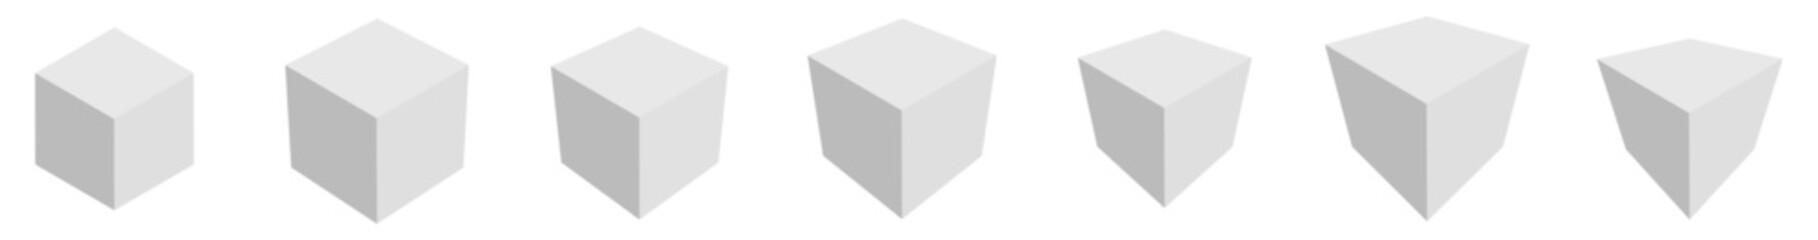 3d Cube icon, symbol illustration. Building, cargo icon. Squares cubic, cubism graphic